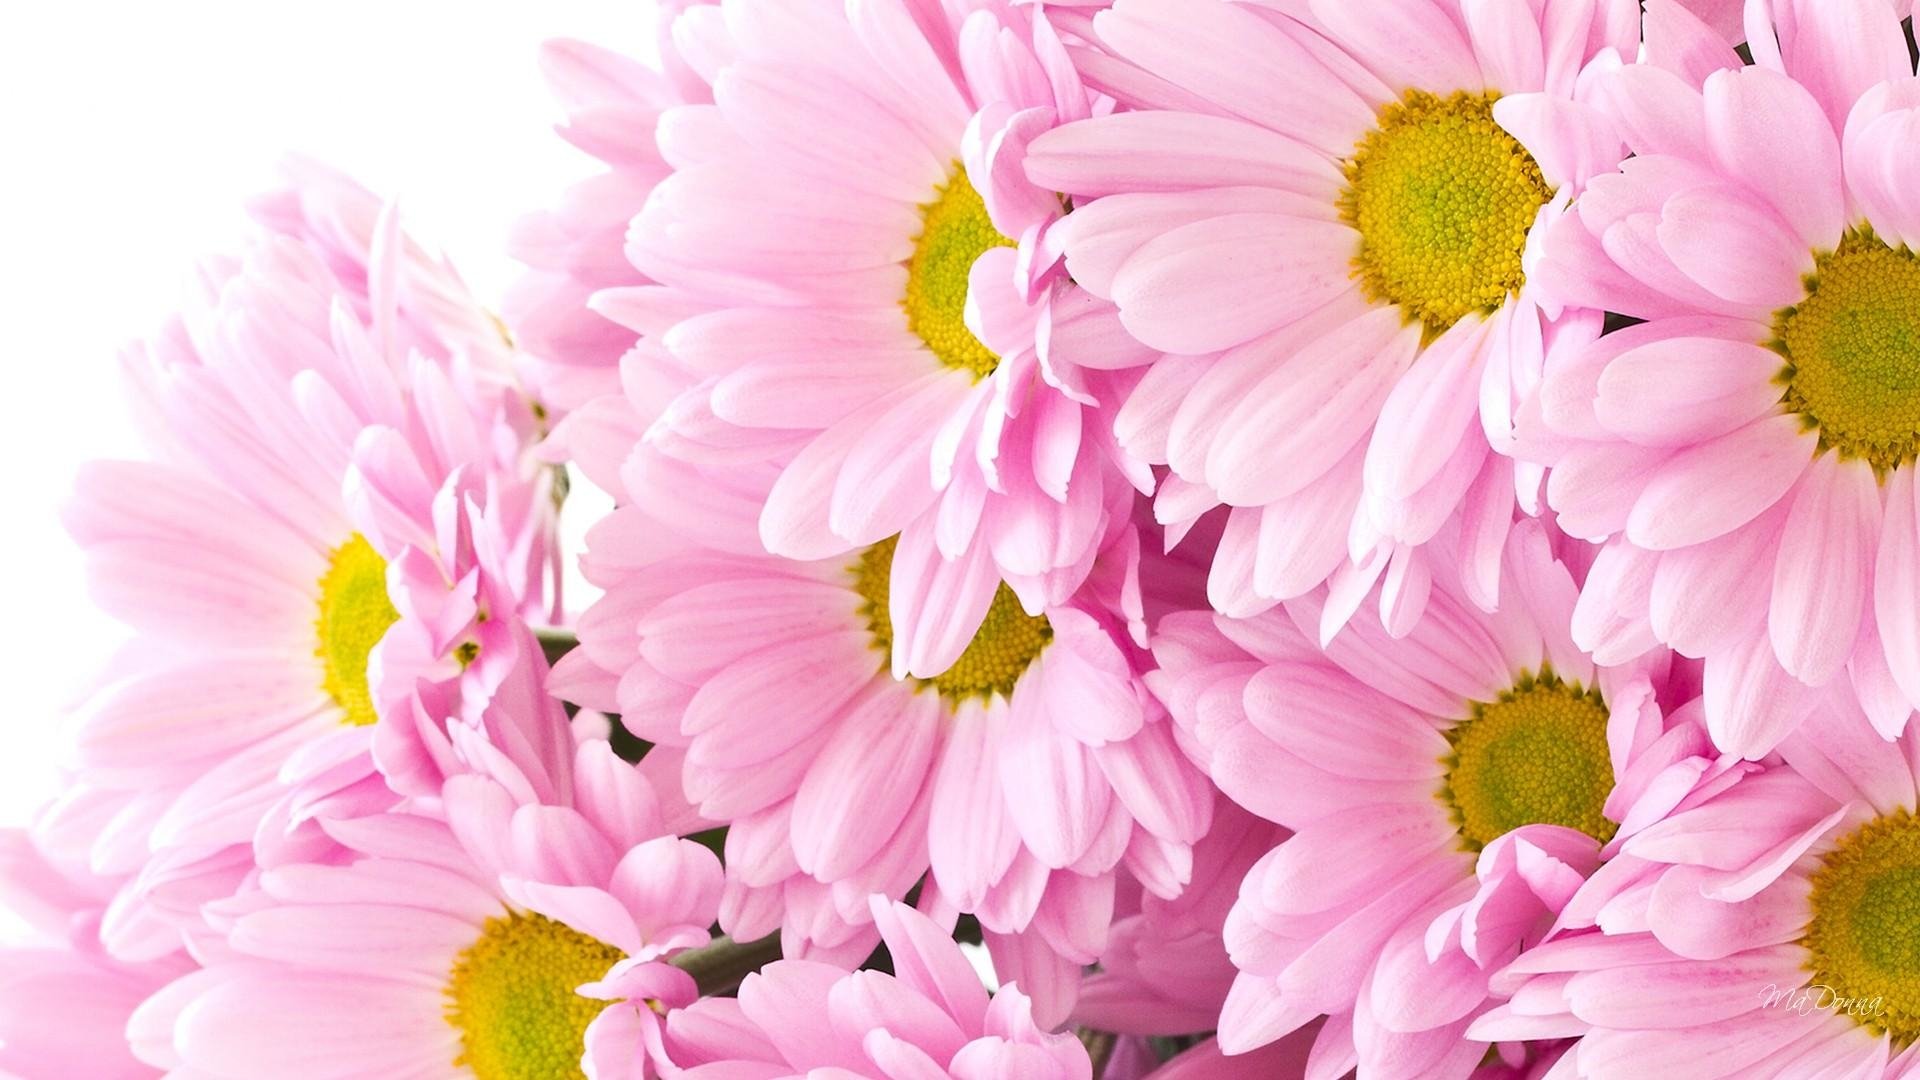 chrysanthemum wallpaper,flower,flowering plant,petal,pink,gerbera